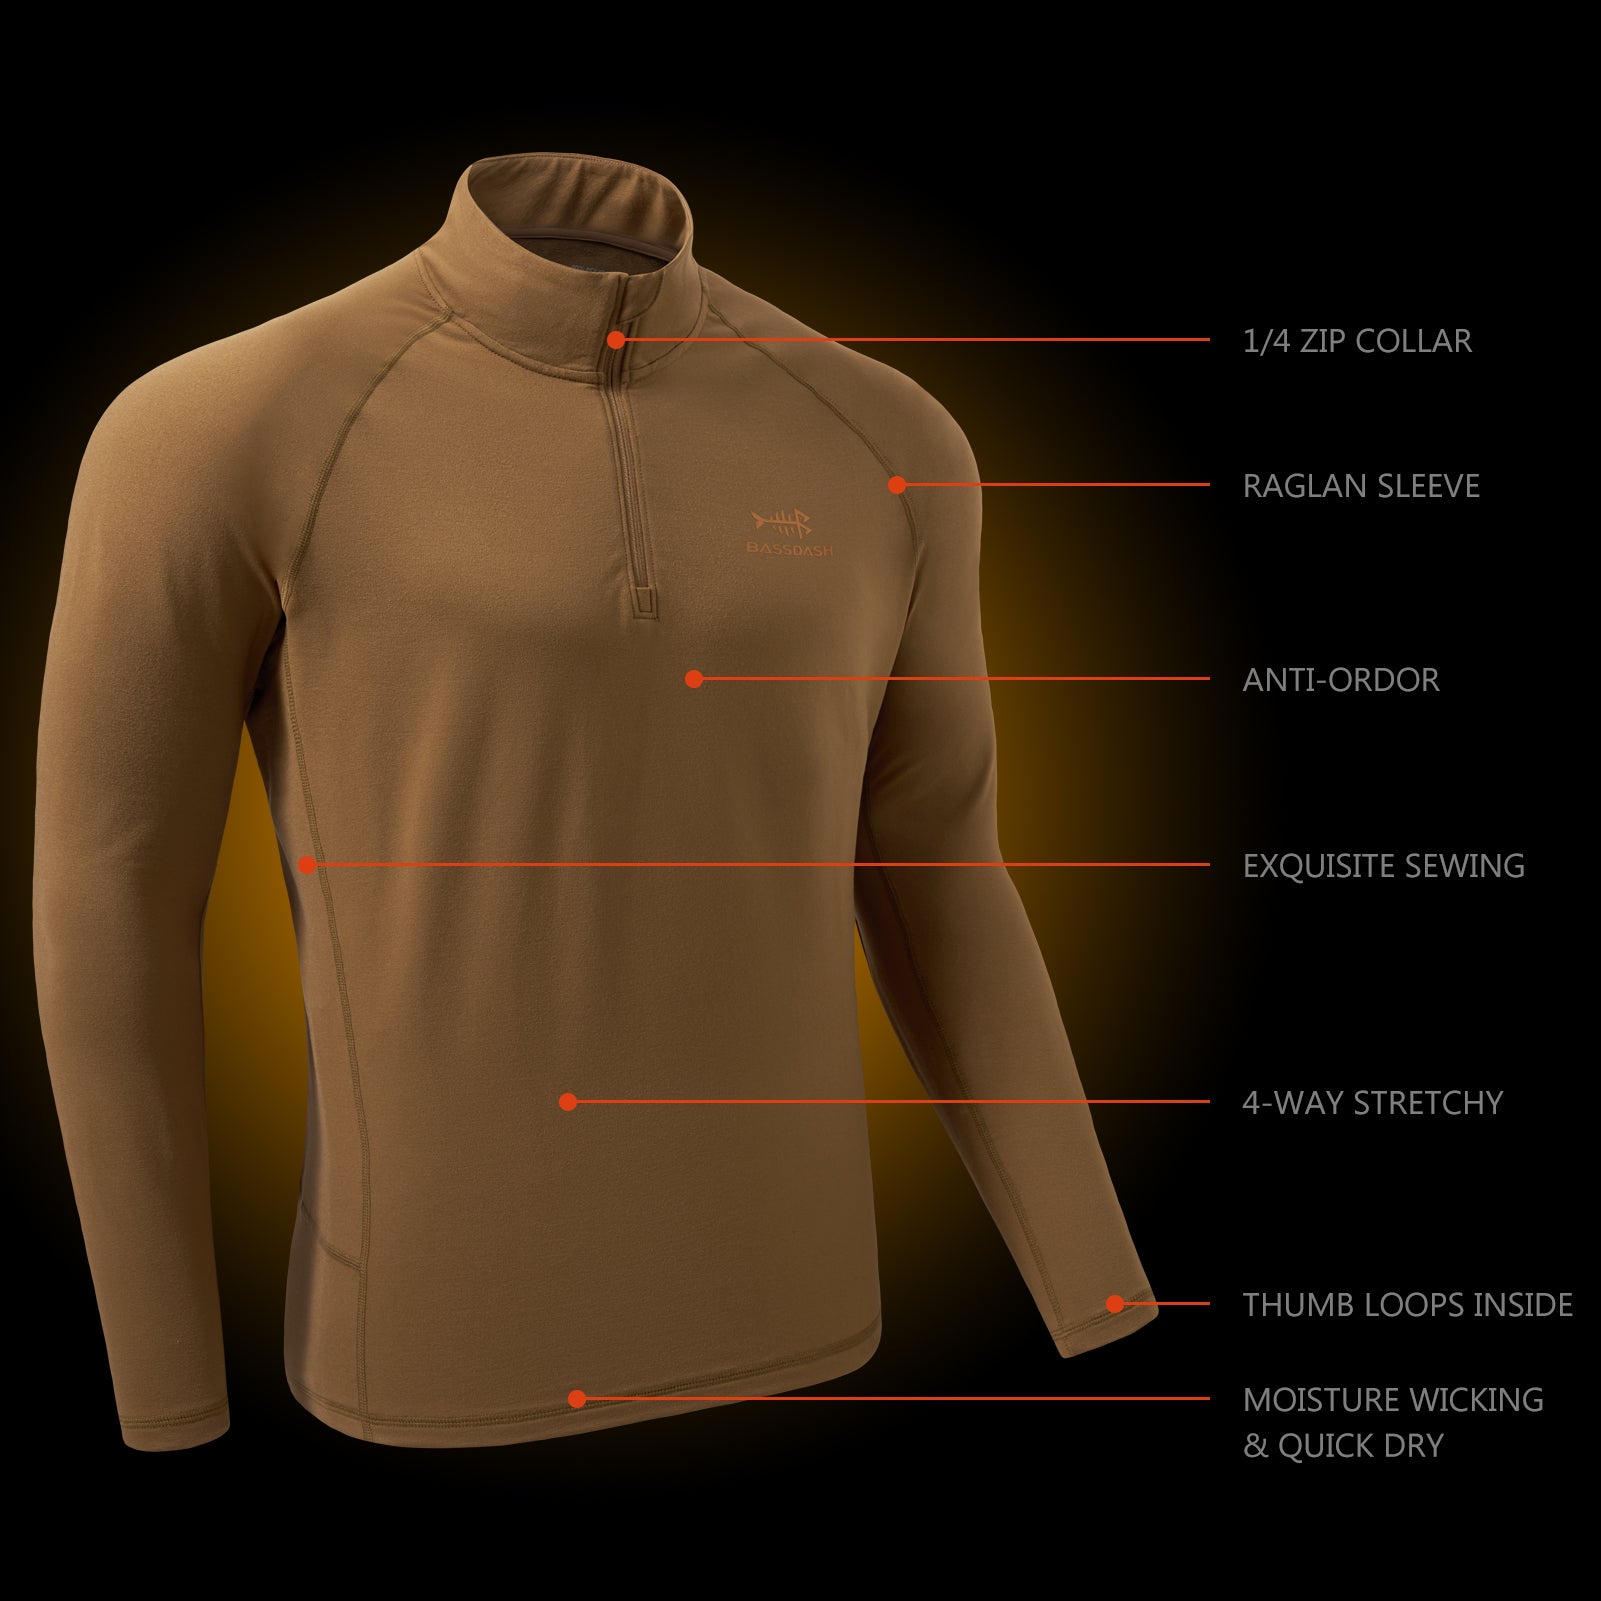 Clothing Layers for Paddling - SPF Shirts, Base Layer Shirts